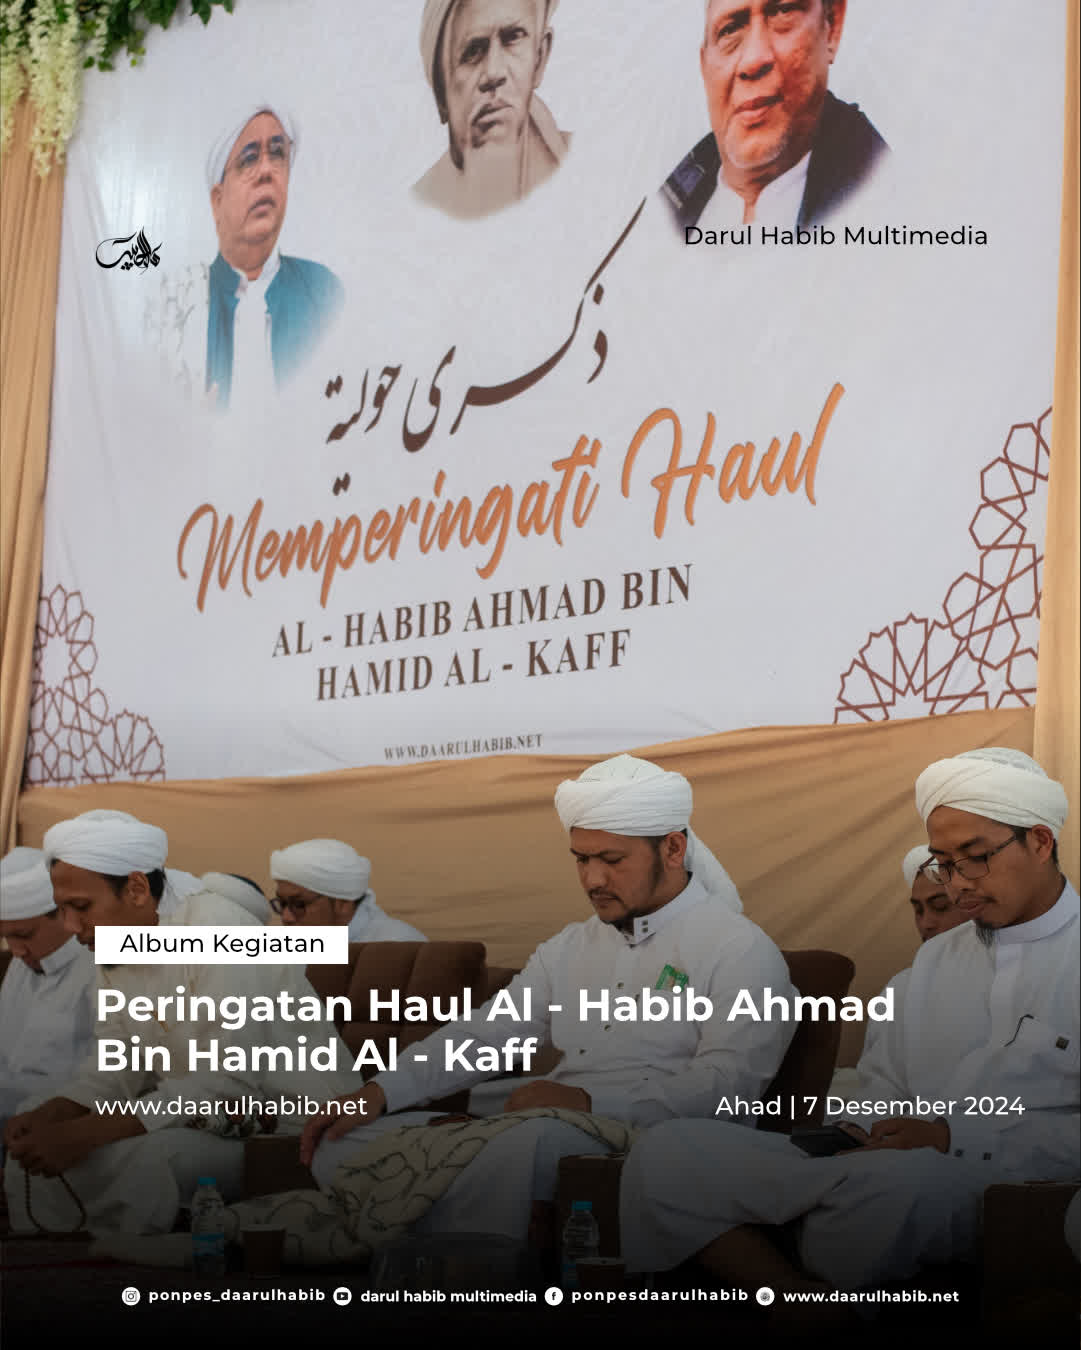 Peringatan Haul Al Habib Ahmad bin Hamid Alkaff